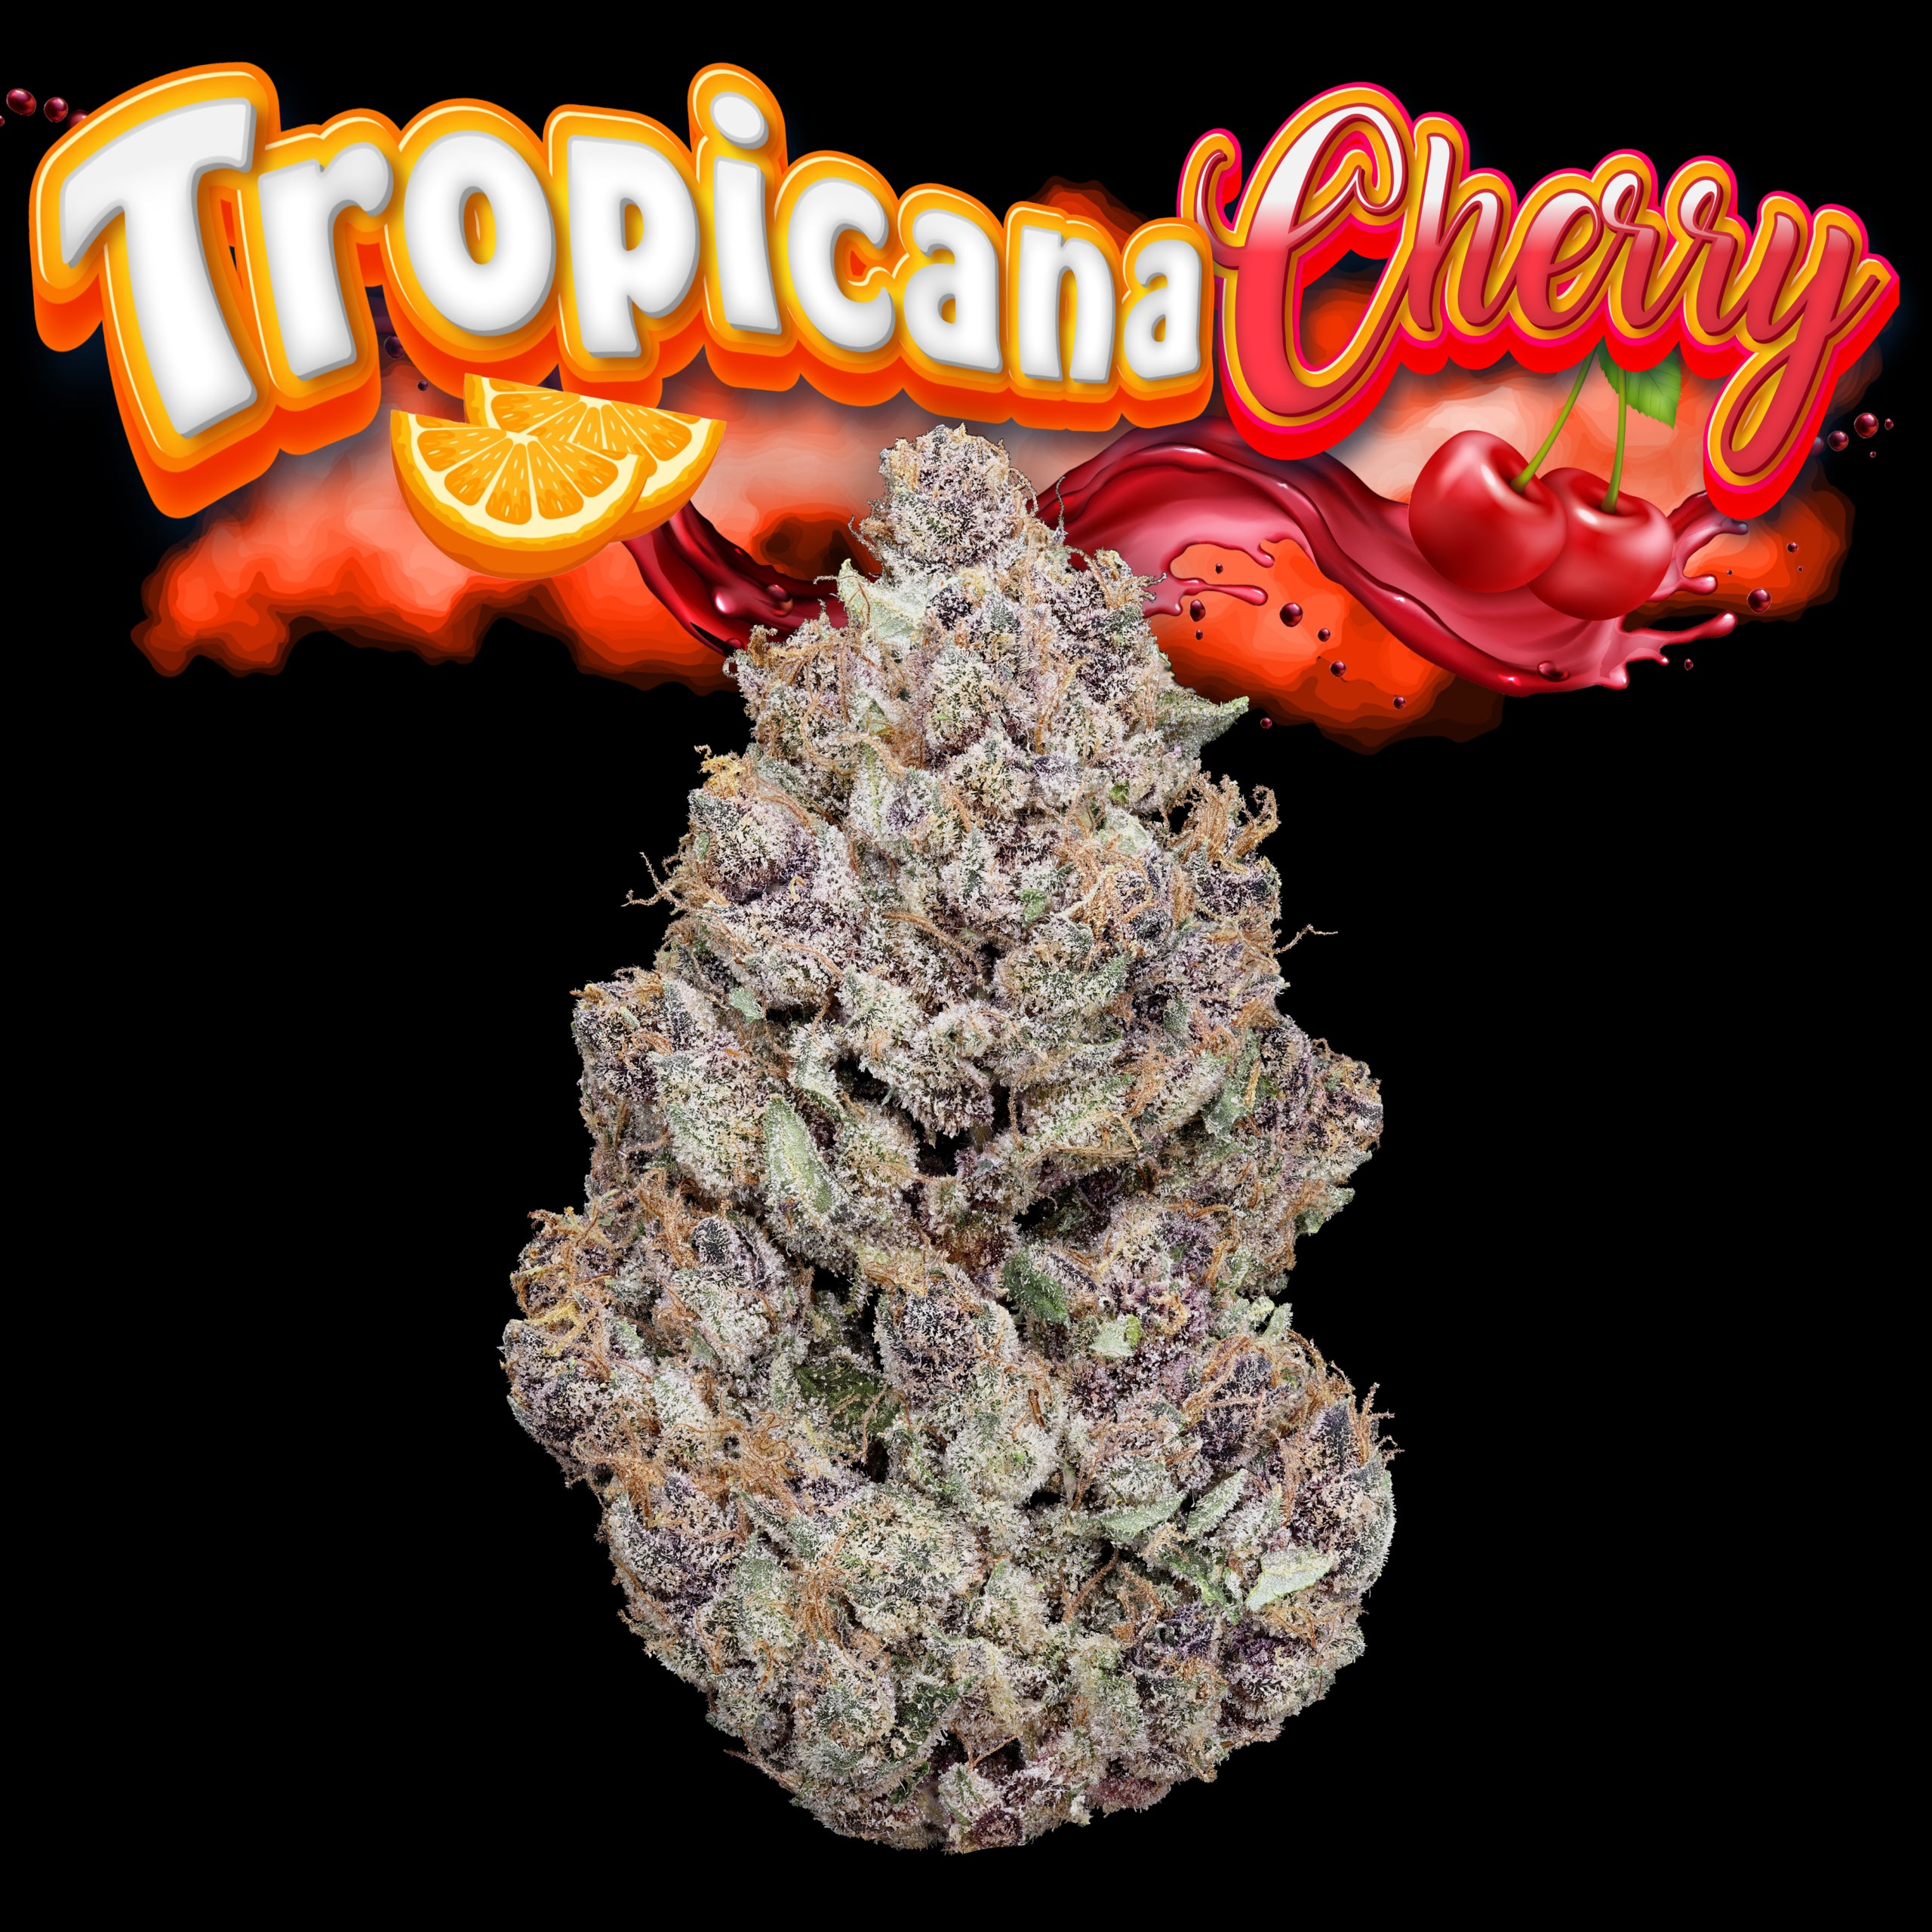 Tropicanna Cherry Nug